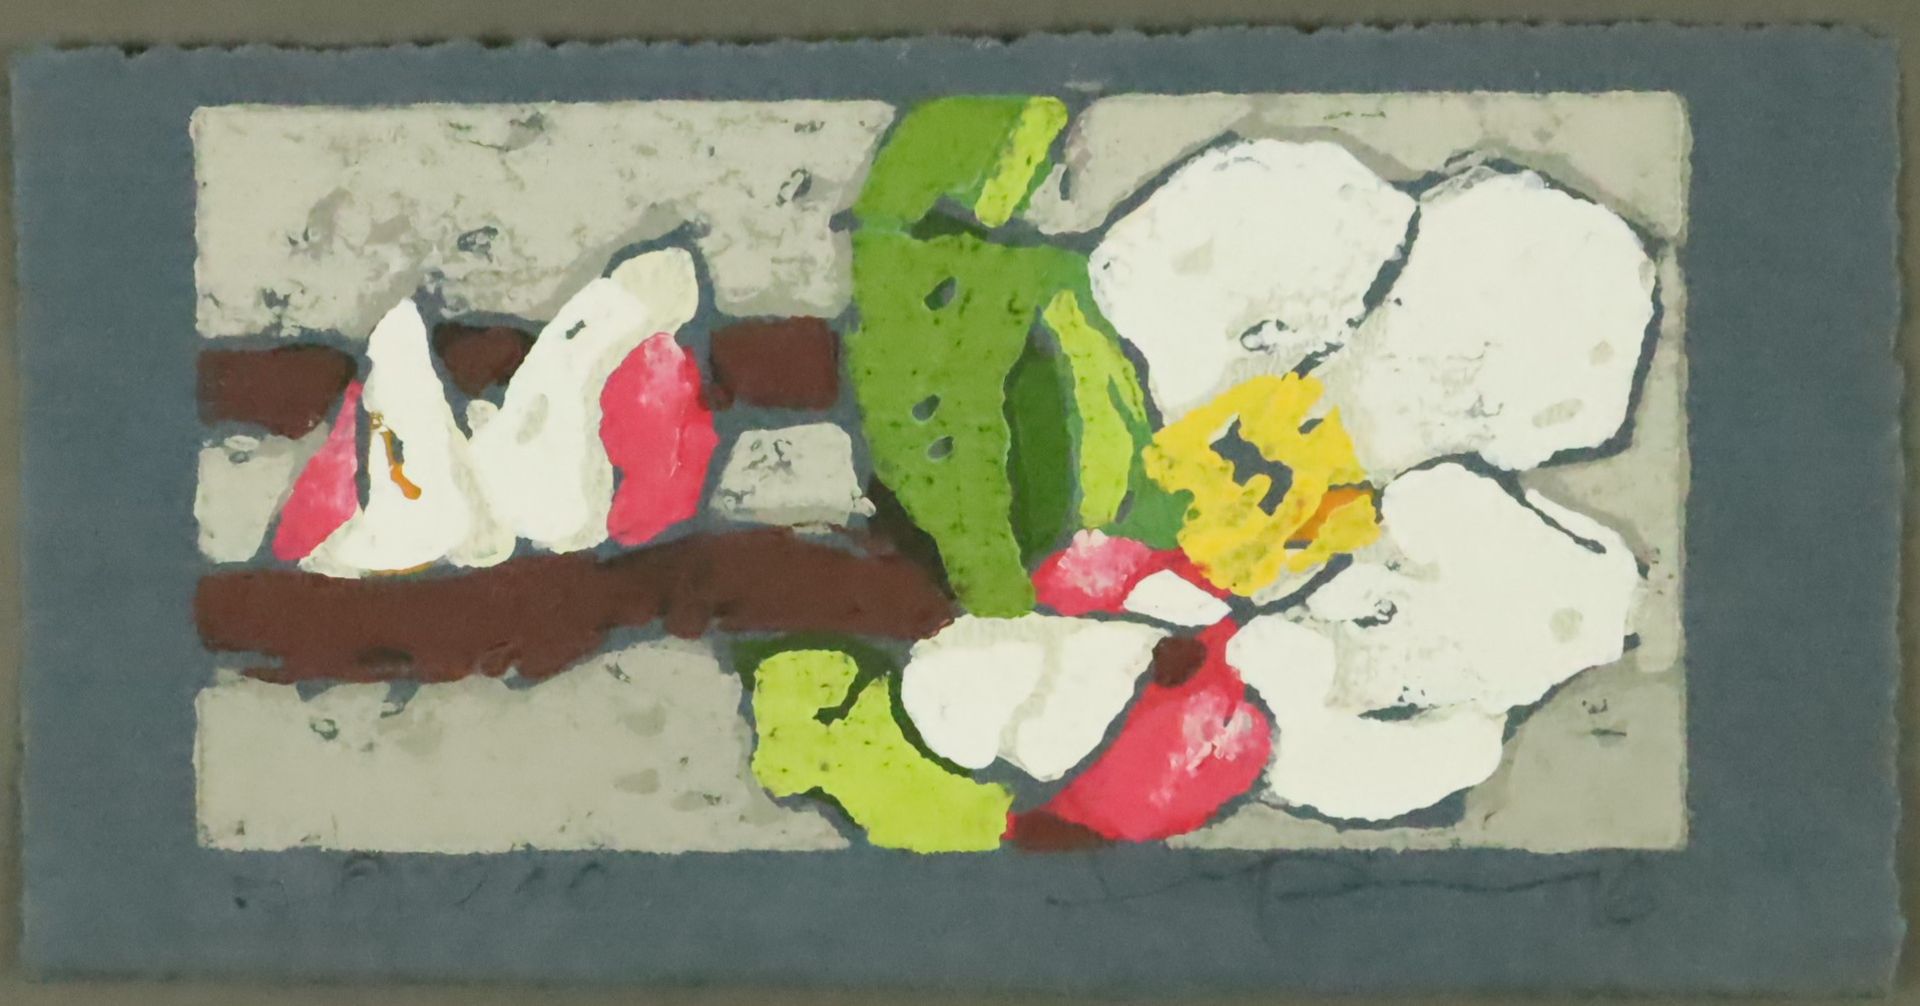 Fußmann, Klaus (*1938 Velbert) - "Kirschblüten", 2016, Farblinolschnitt, unten rechts signiert und 